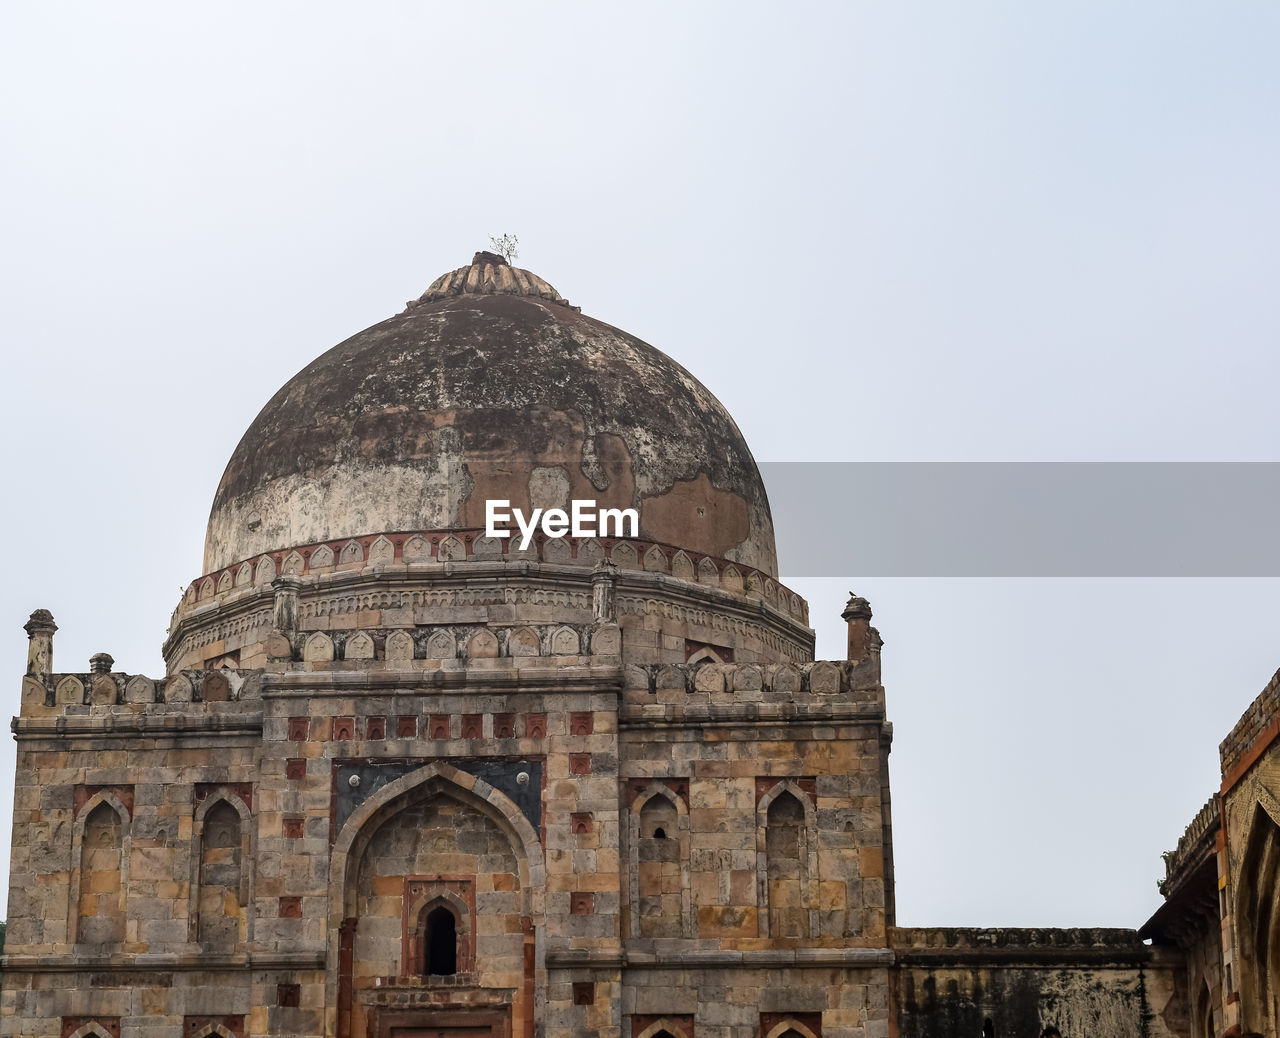 Mughal architecture inside lodhi gardens, delhi, india, beautiful architecture inside three-domed